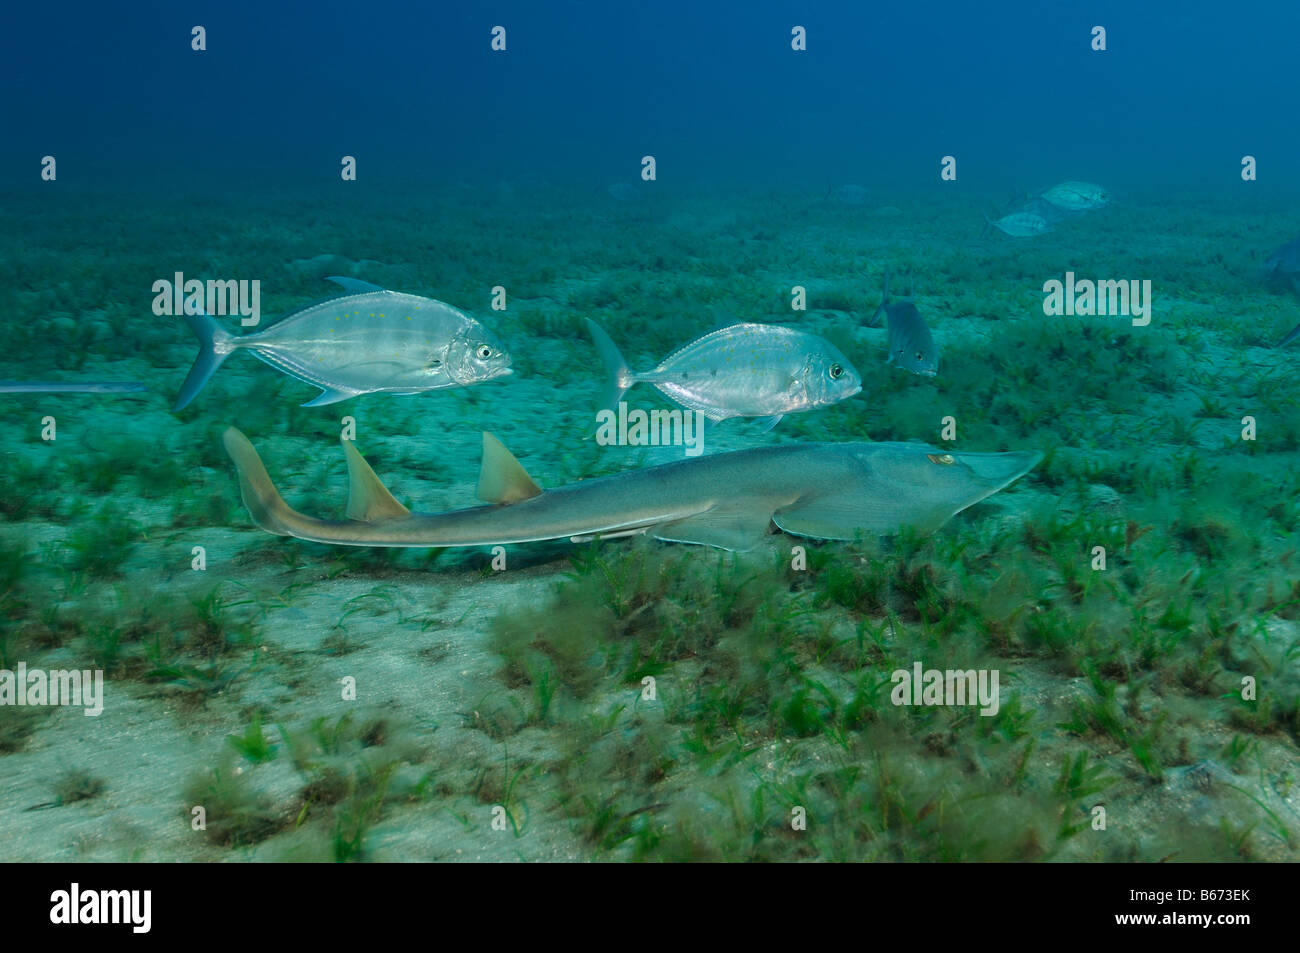 Guitarfish and Trevallys over Seaweed Rhinobatos rhinobatos Abu Dabab Marsa Alam Red Sea Egypt Stock Photo